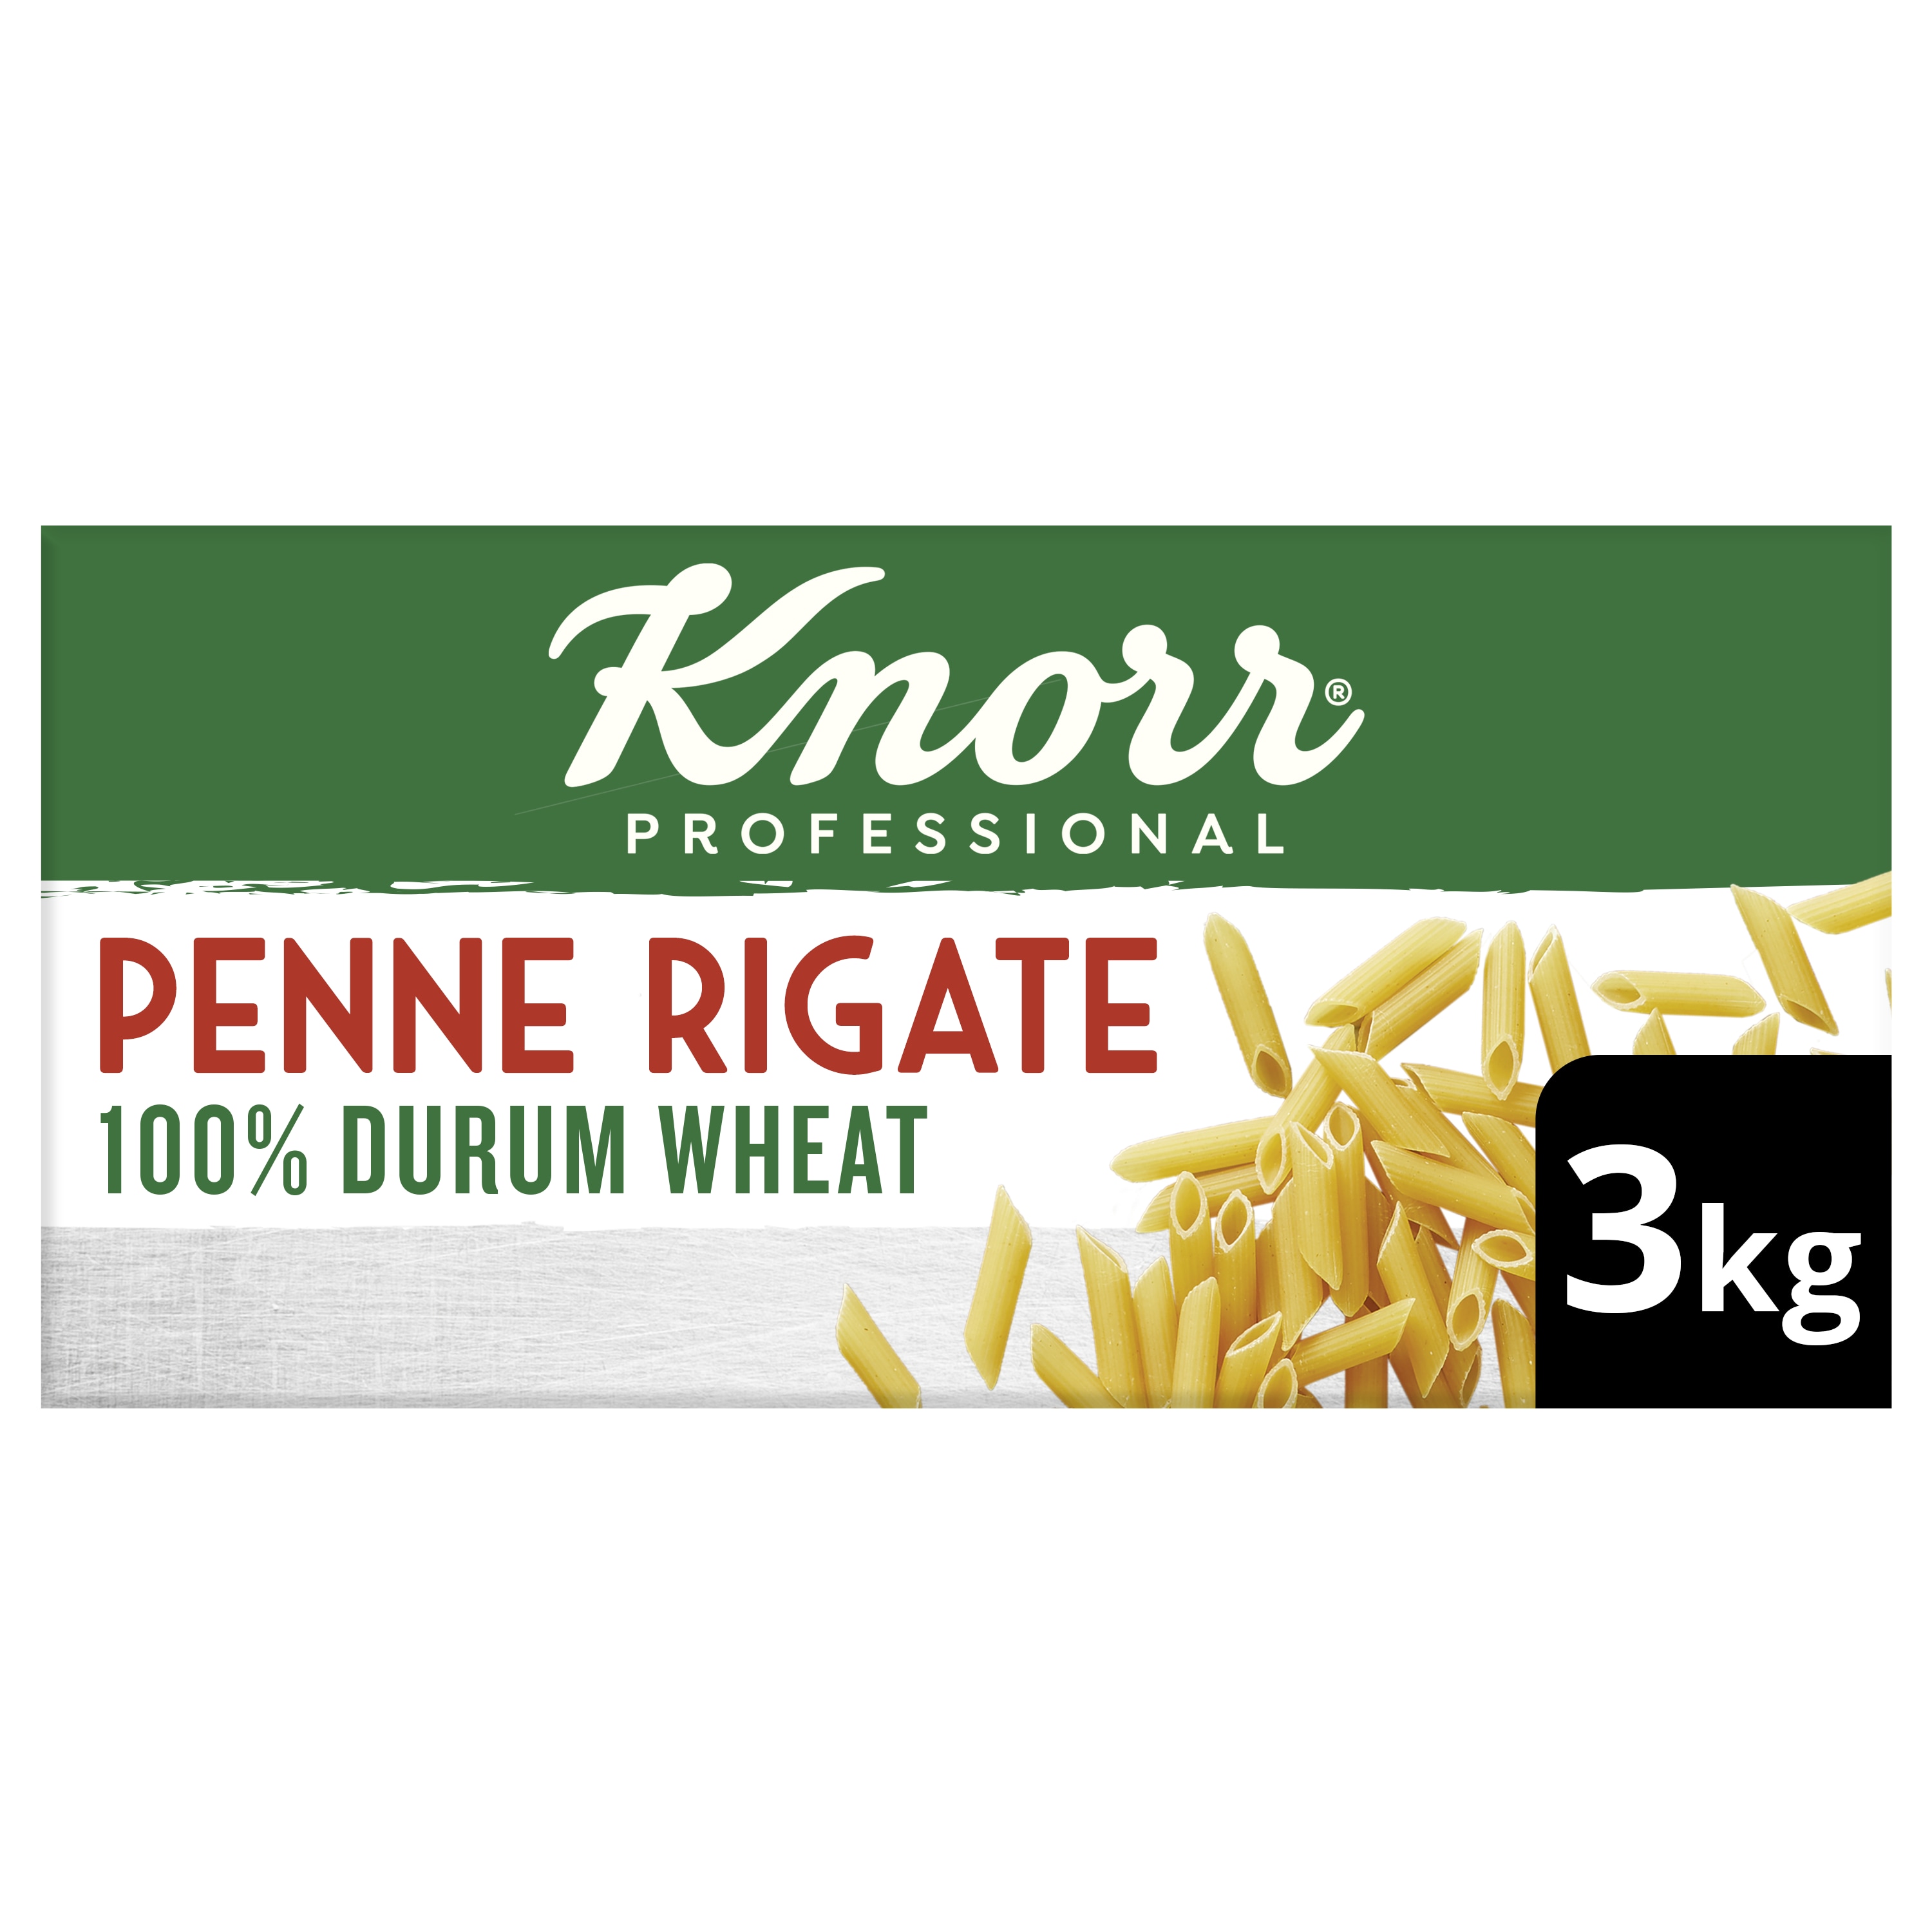 Knorr Professional Italiana Penne 3kg - 